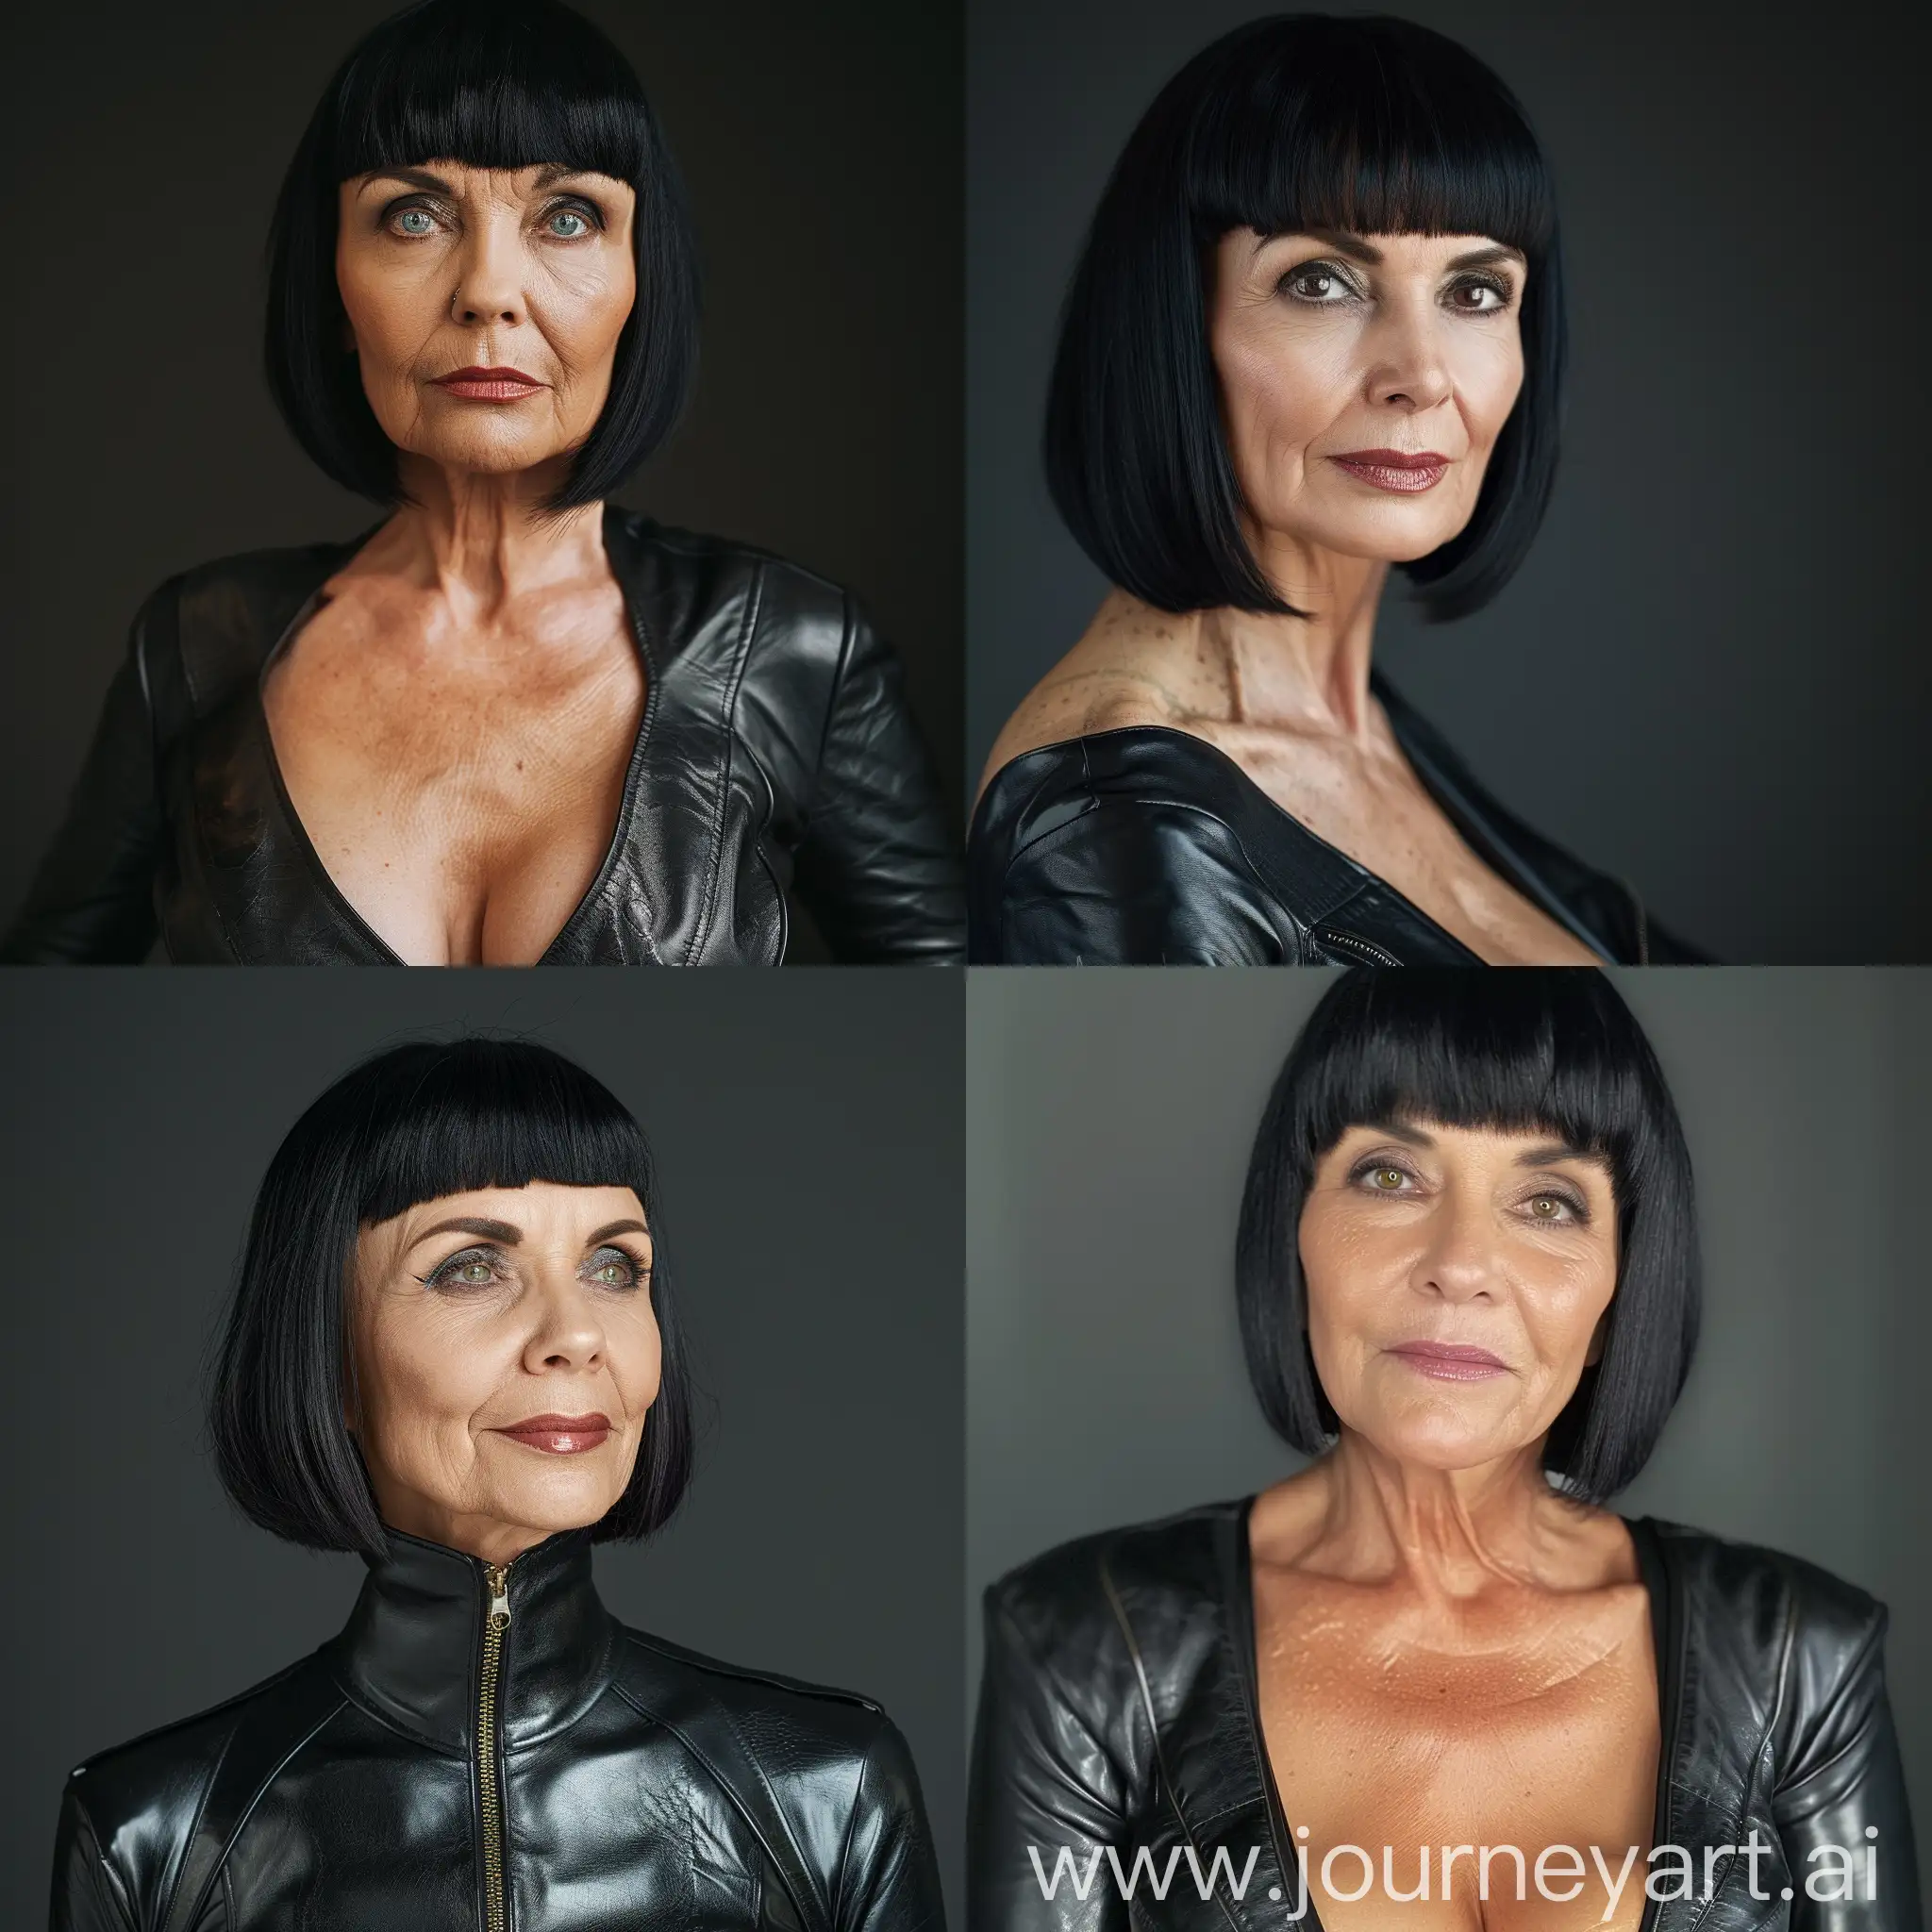 beautiful arrogant 60 years old woman with black bob hair cut wearing tight leather